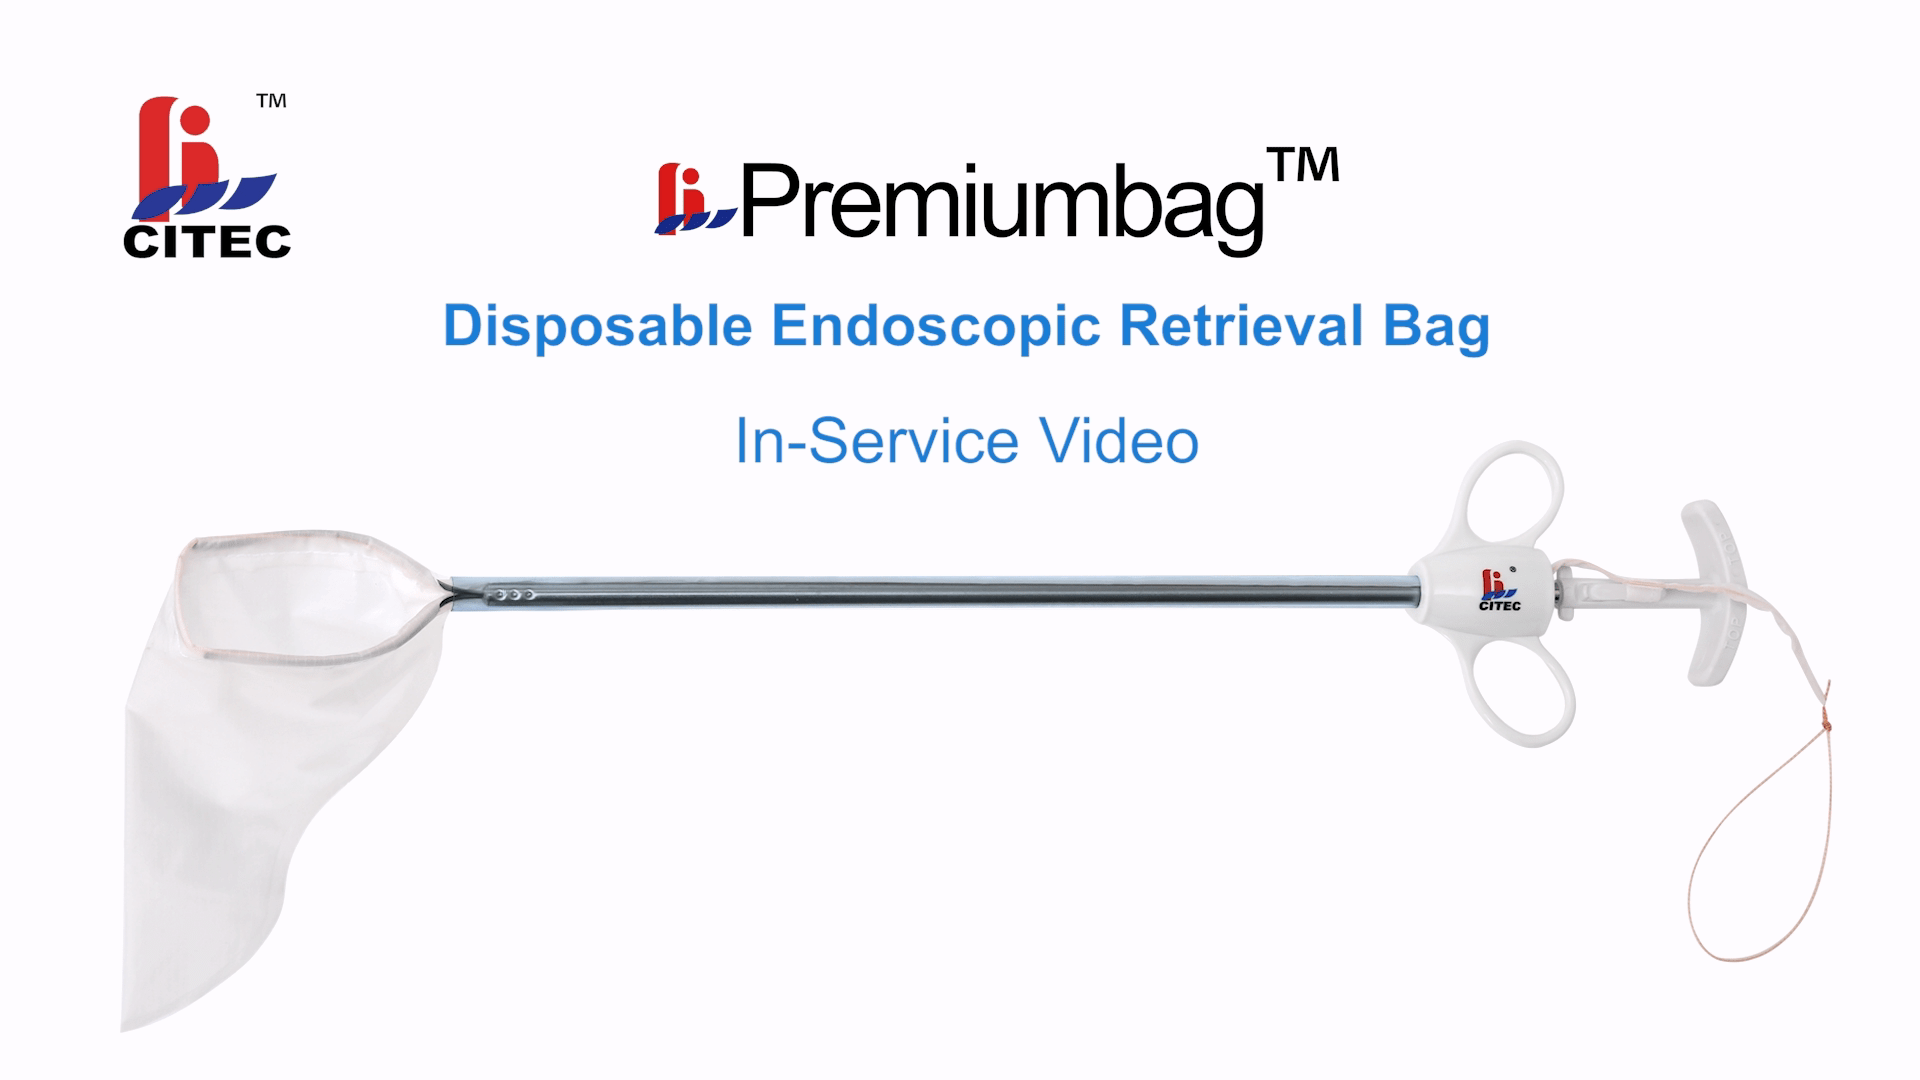 Premiumbag™ Disposable Endoscopic Retrieval Bag In-Service Video